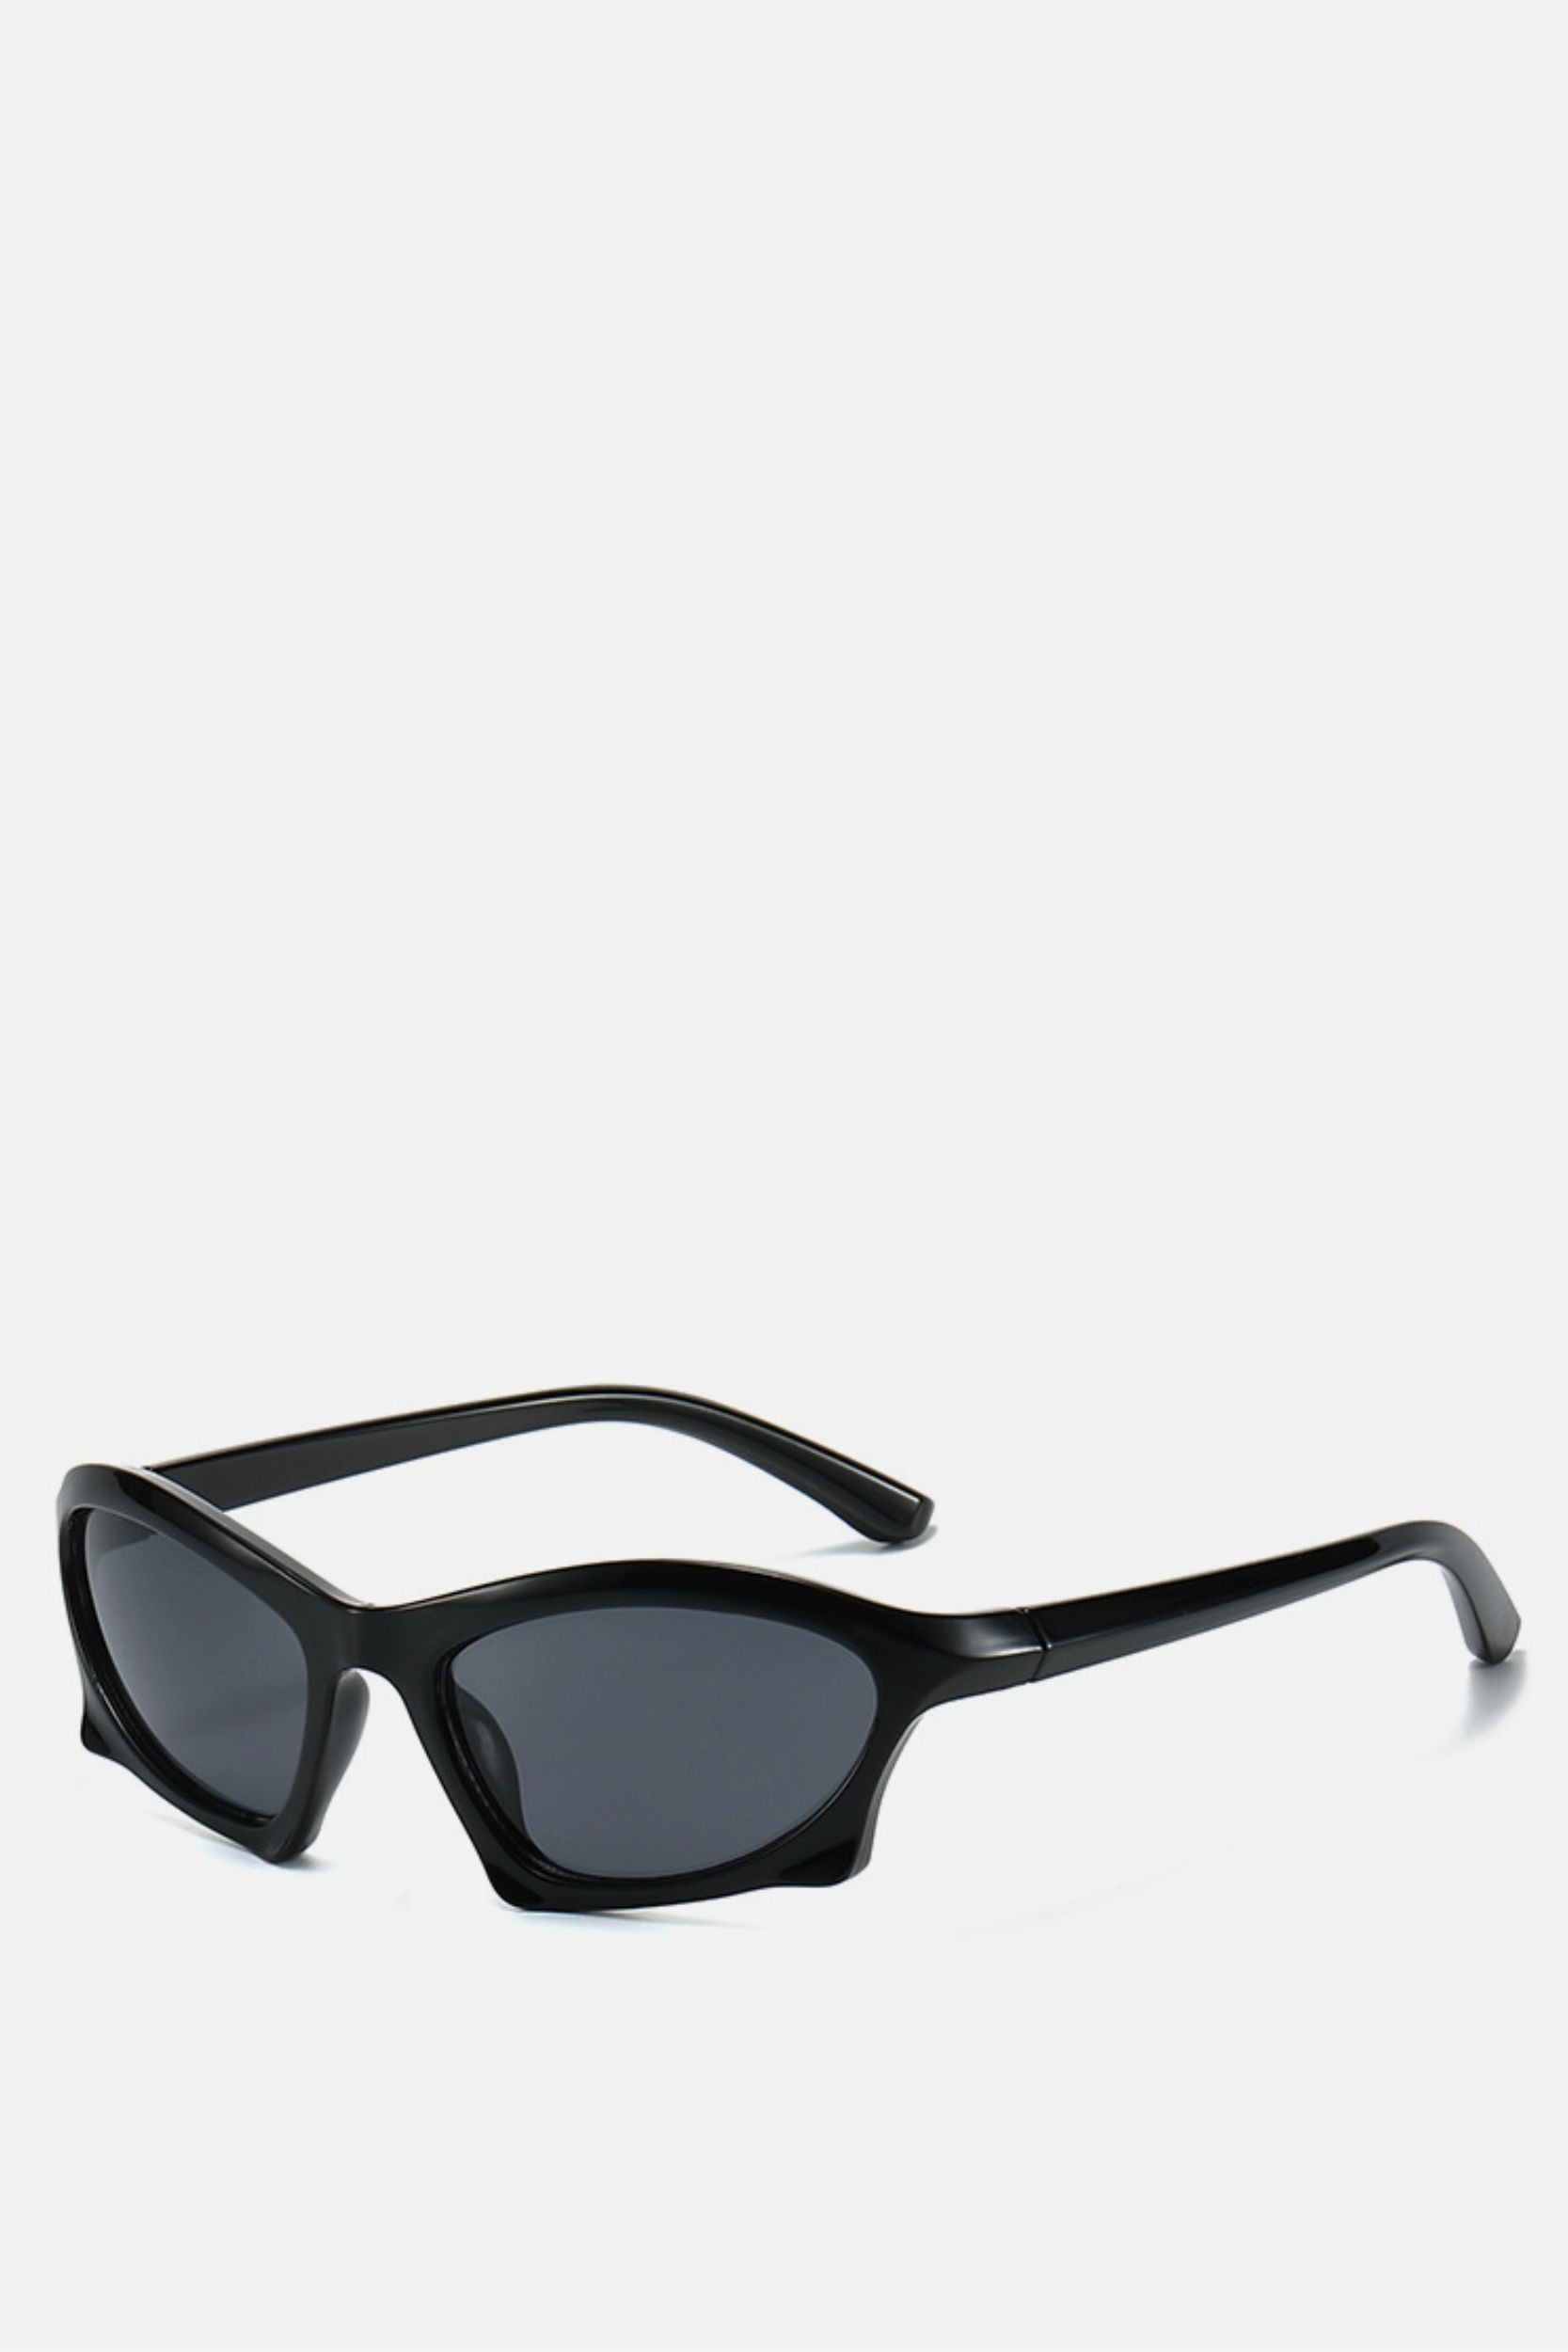 CALI Black Cat Eye Sunglasses